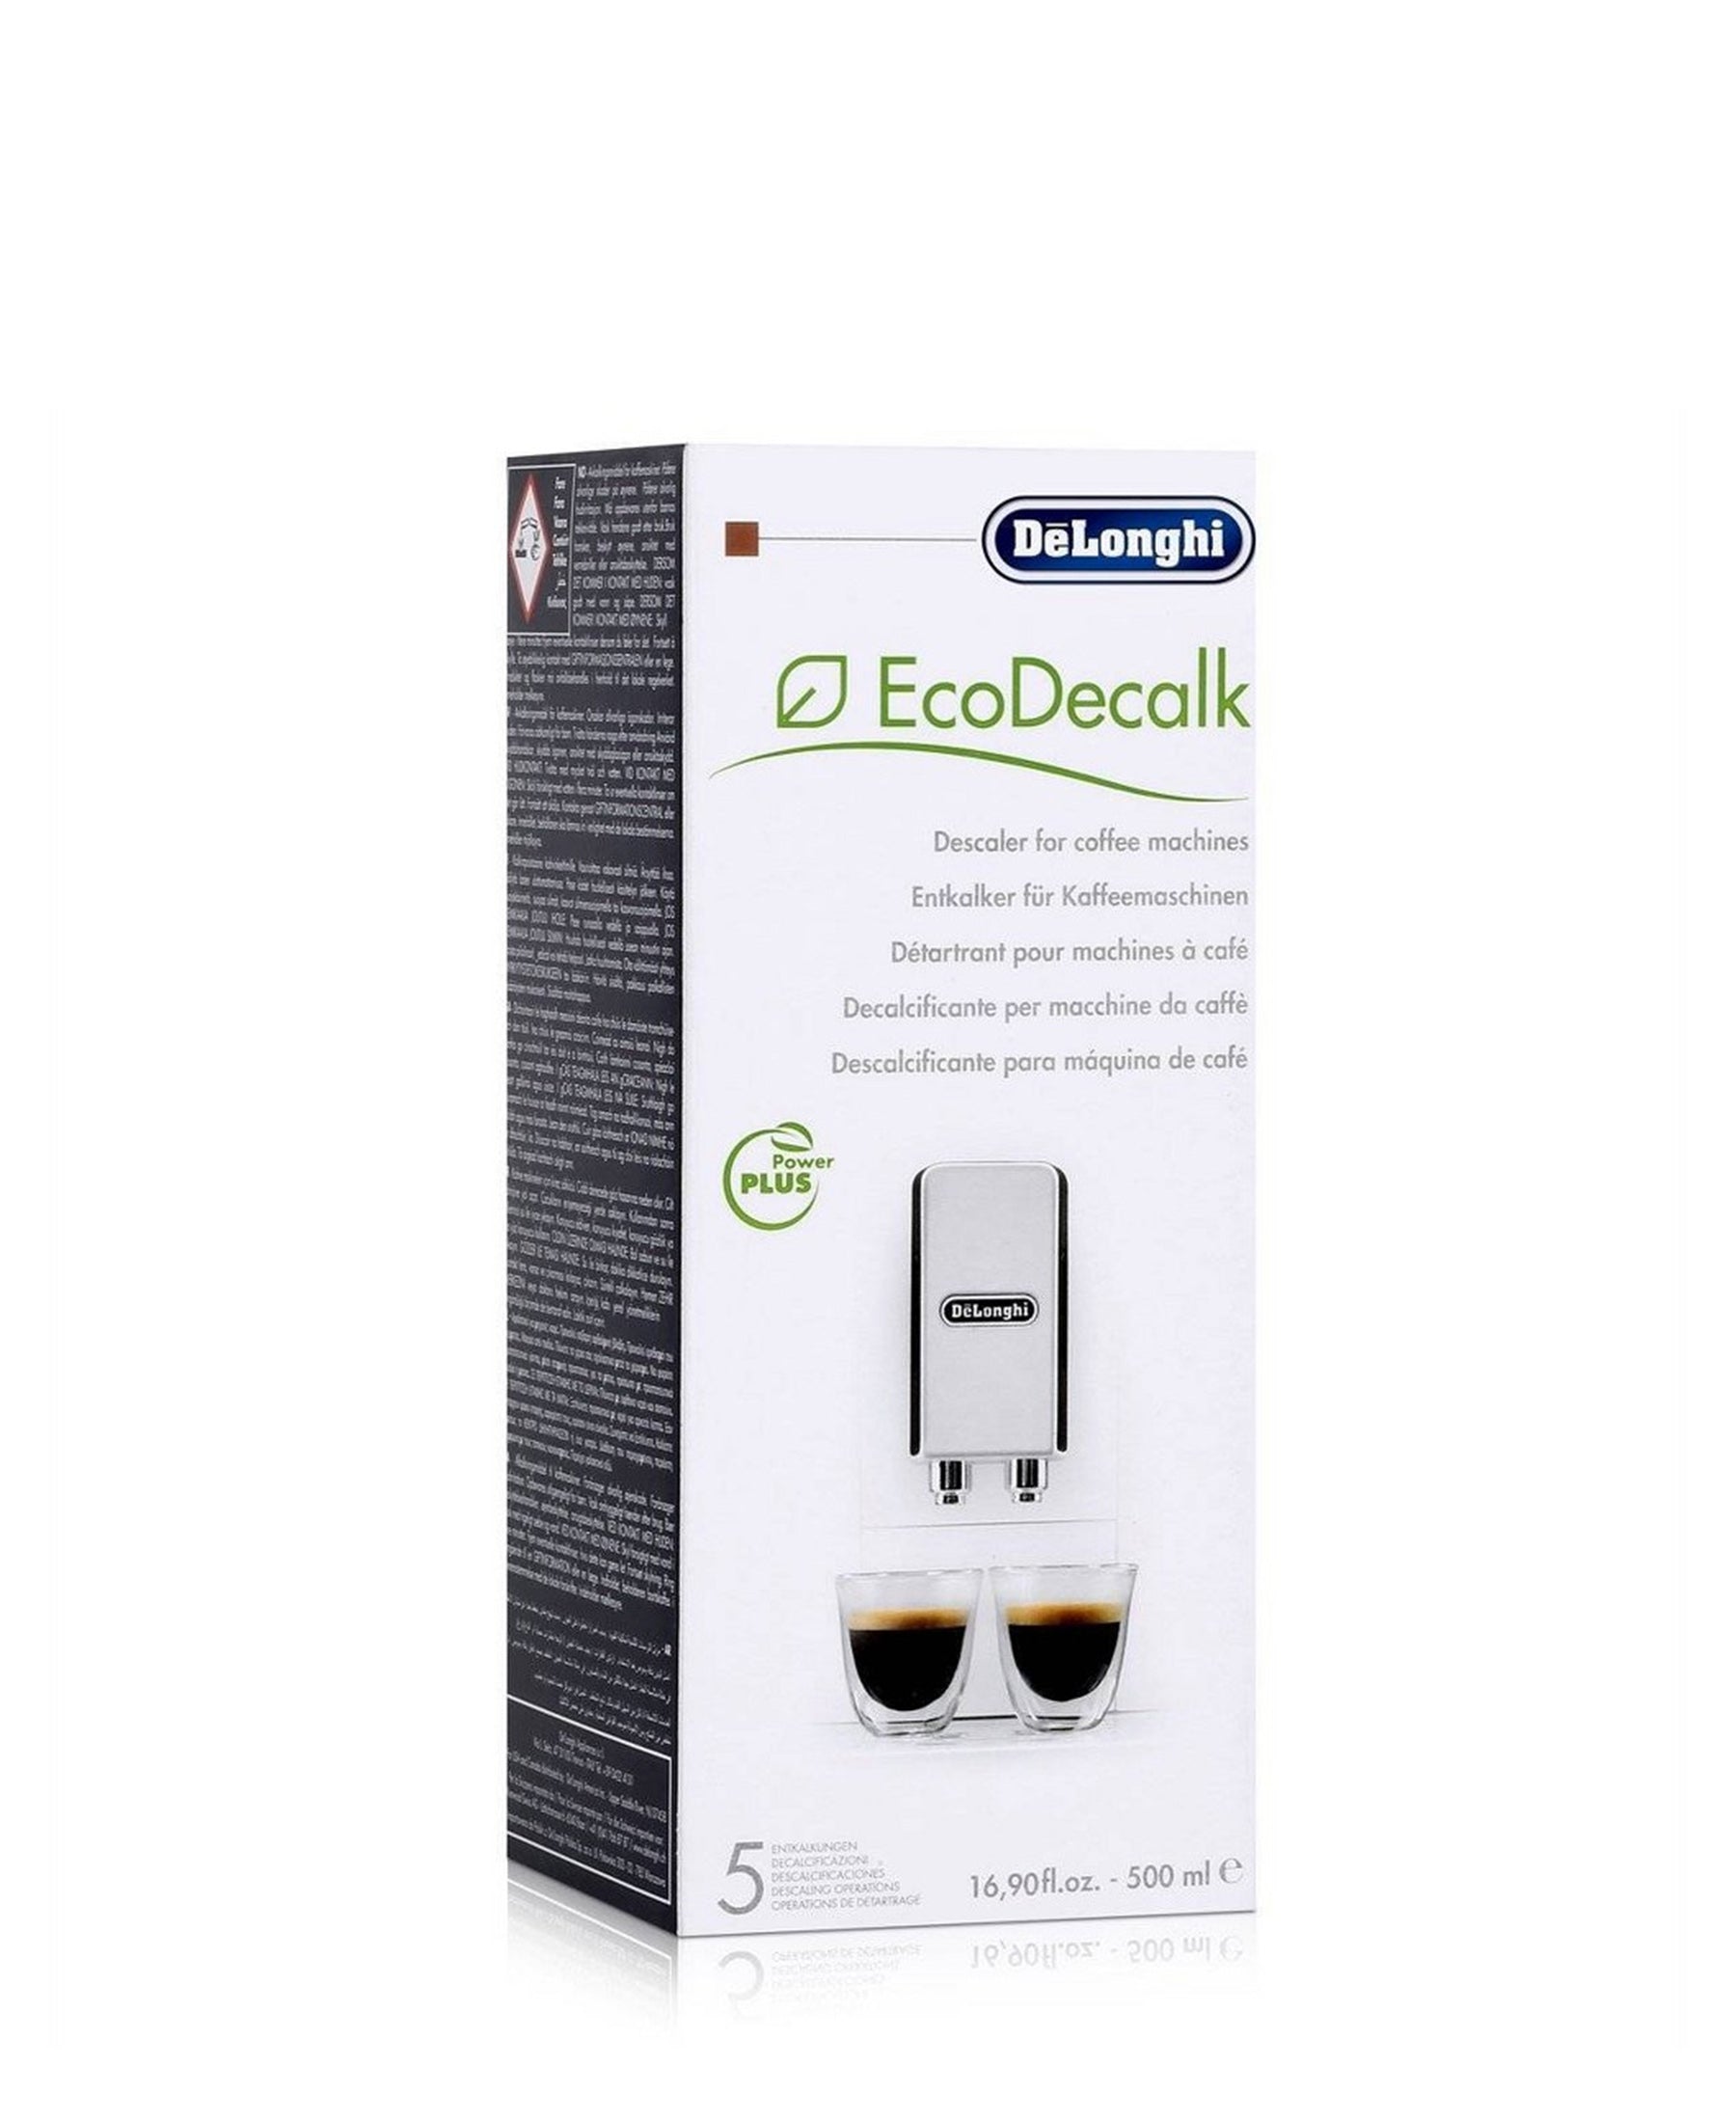 DeLonghi Eco Decalk - Clear